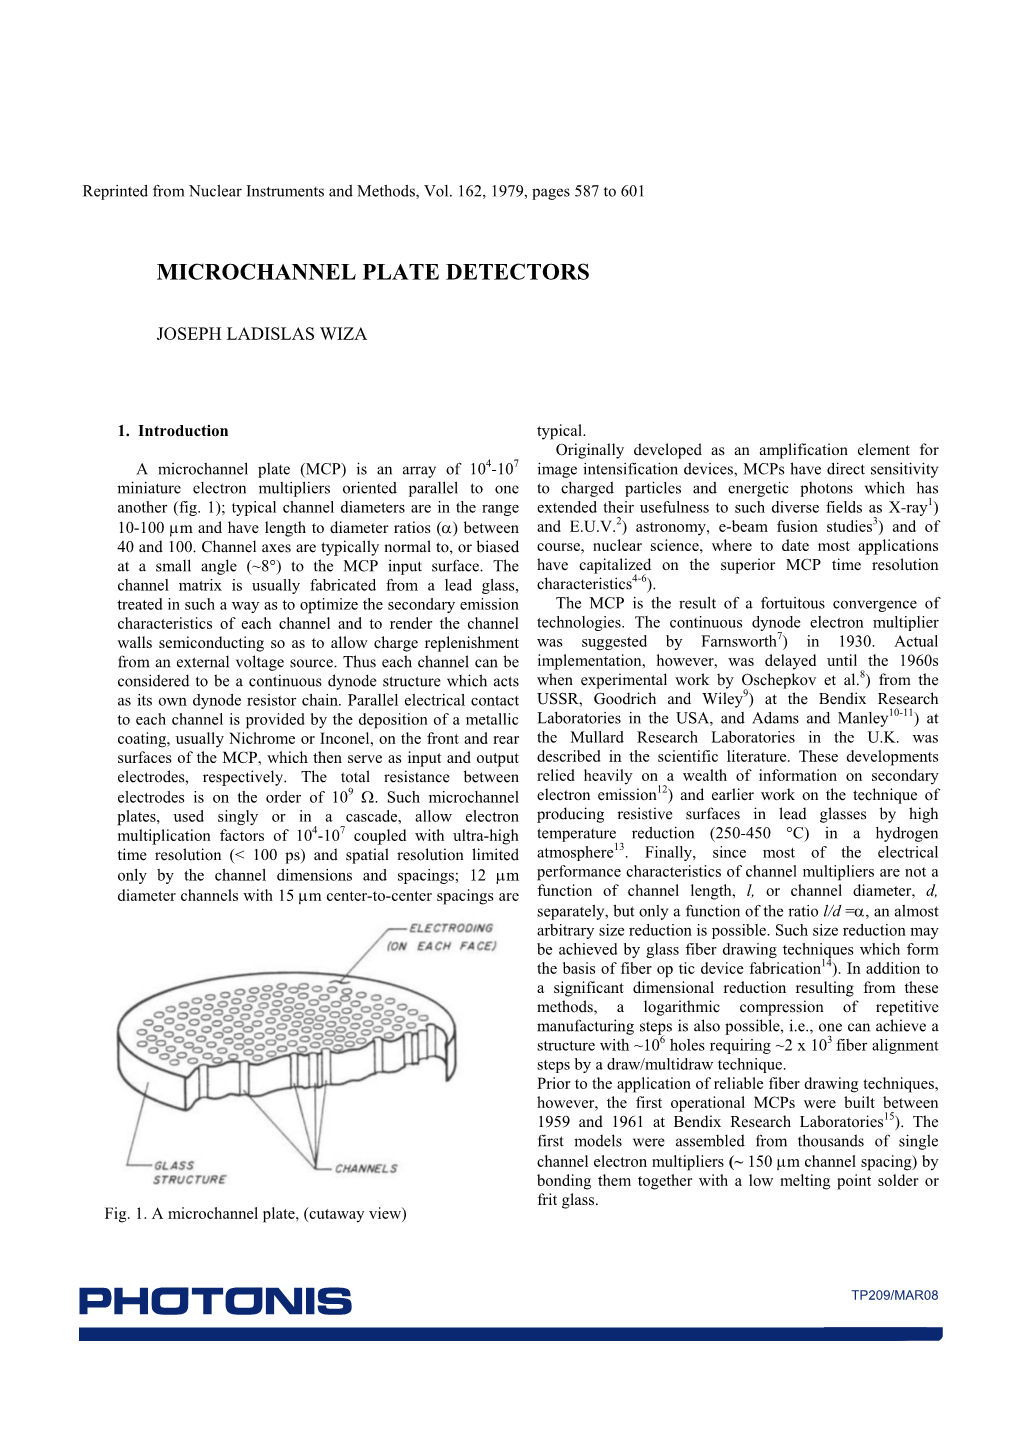 Microchannel Plate Detectors